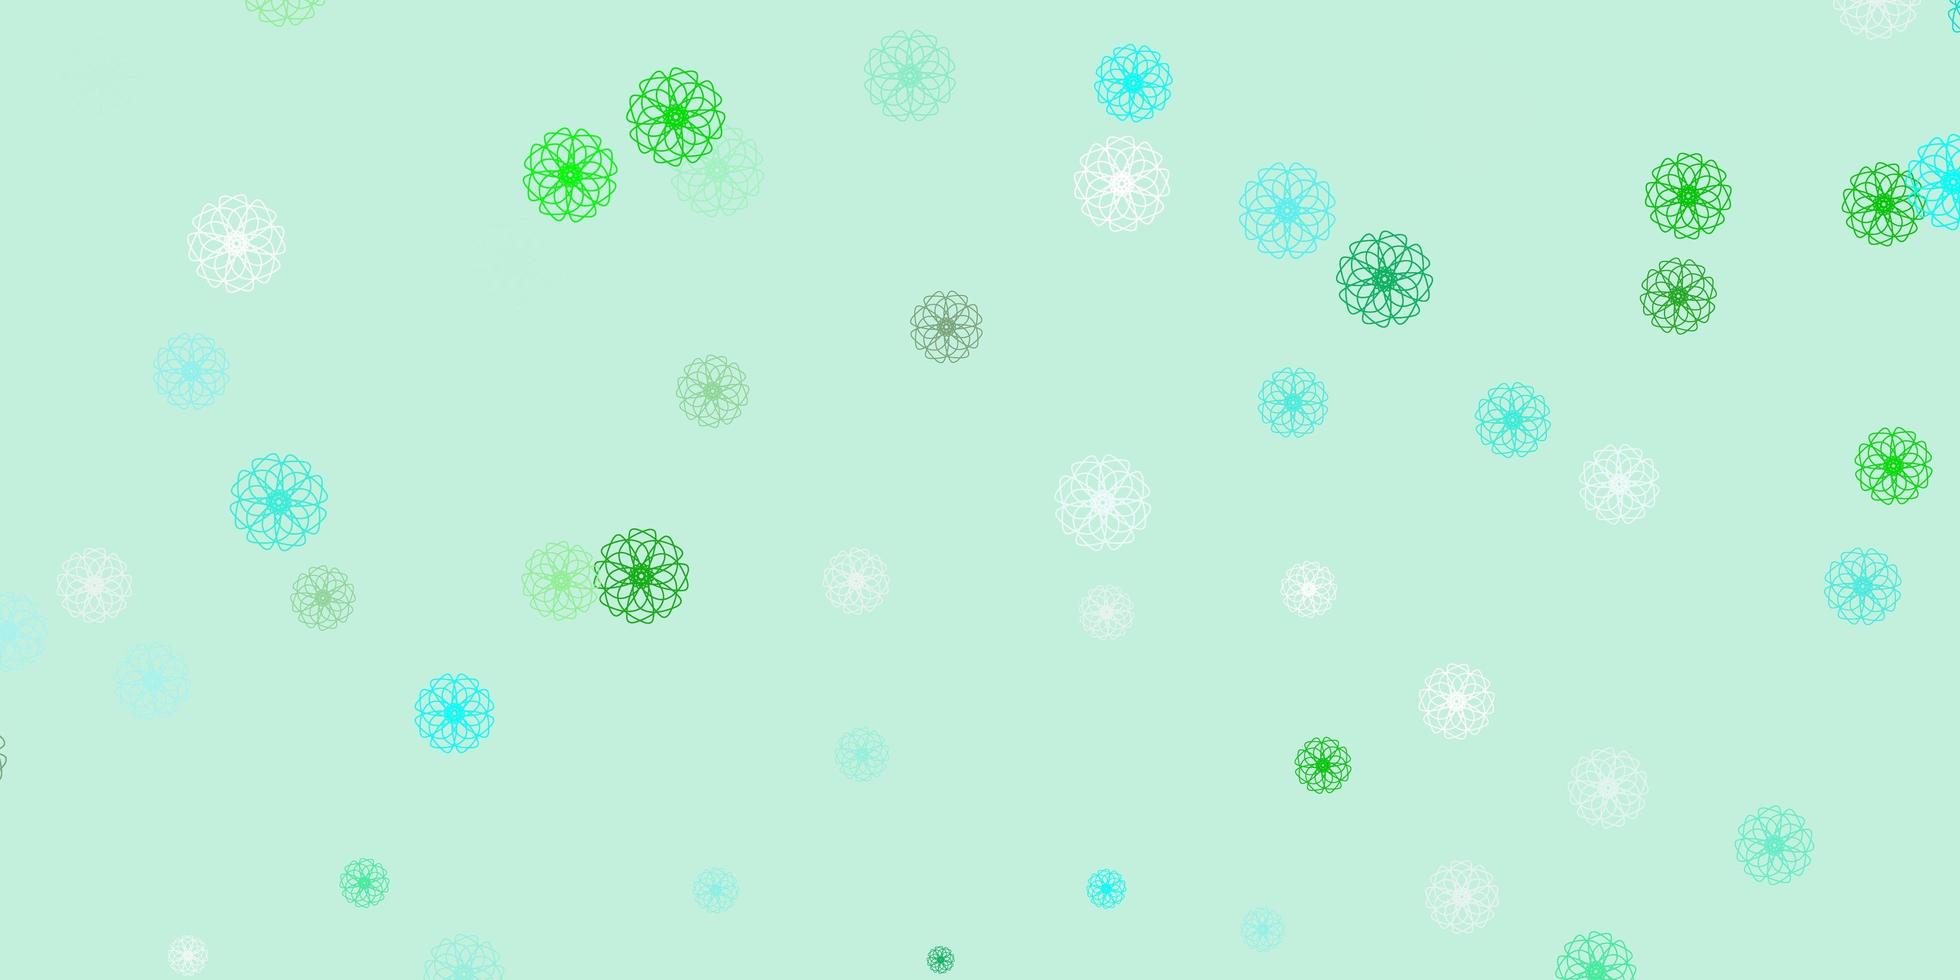 hellblaue, grüne Vektor-Gekritzel-Textur mit Blumen. vektor